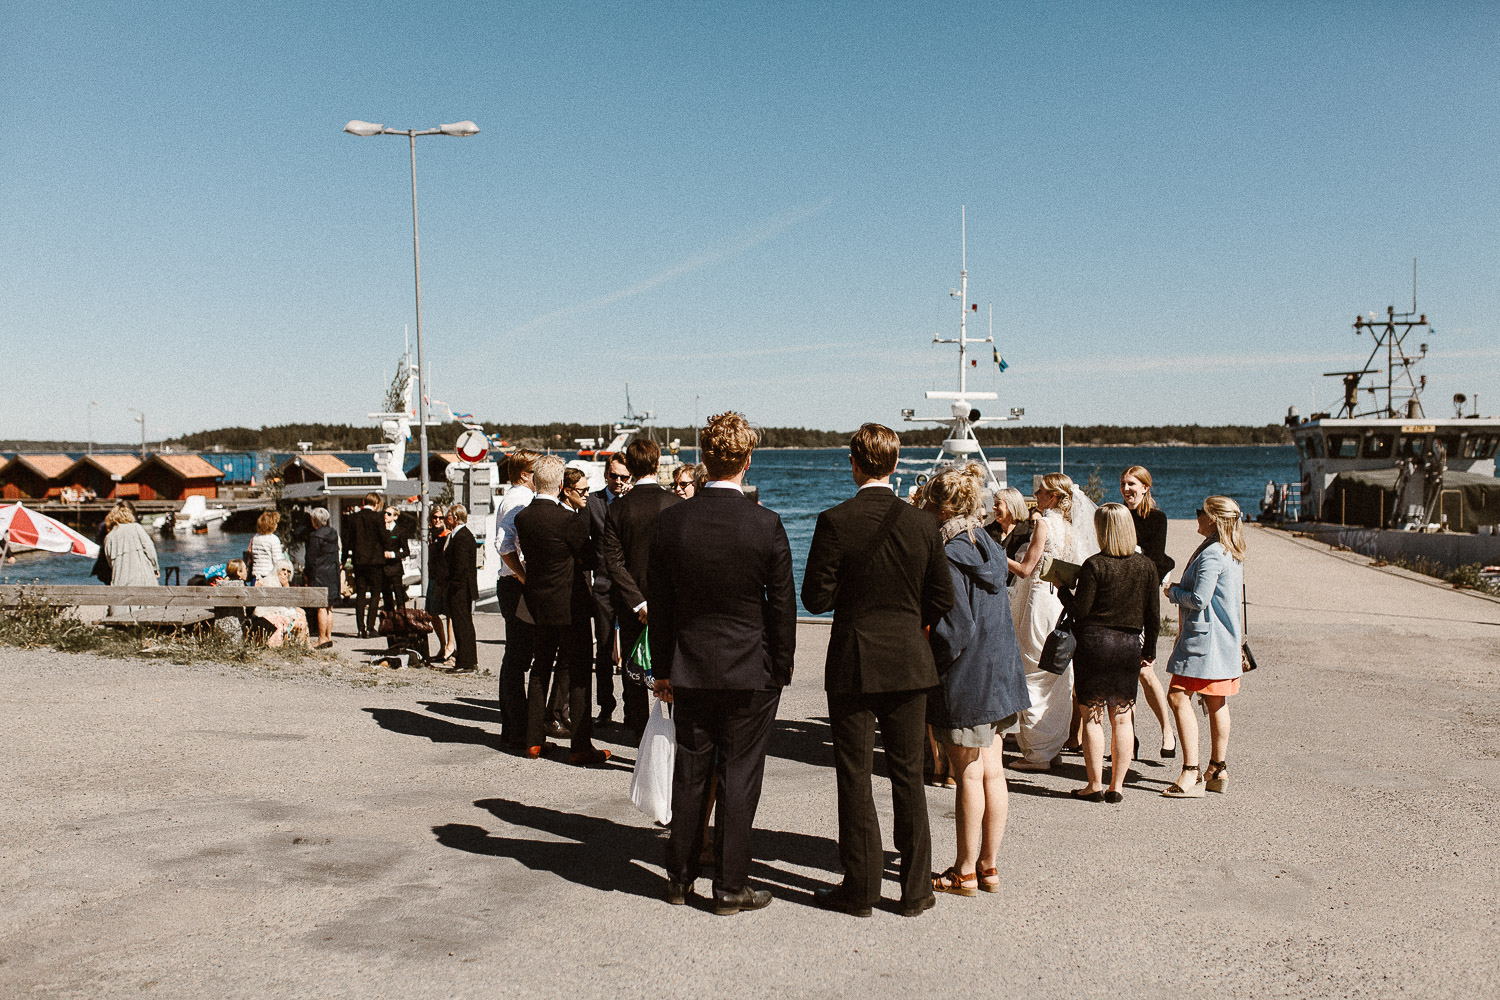 island destination wedding stockholm sweden